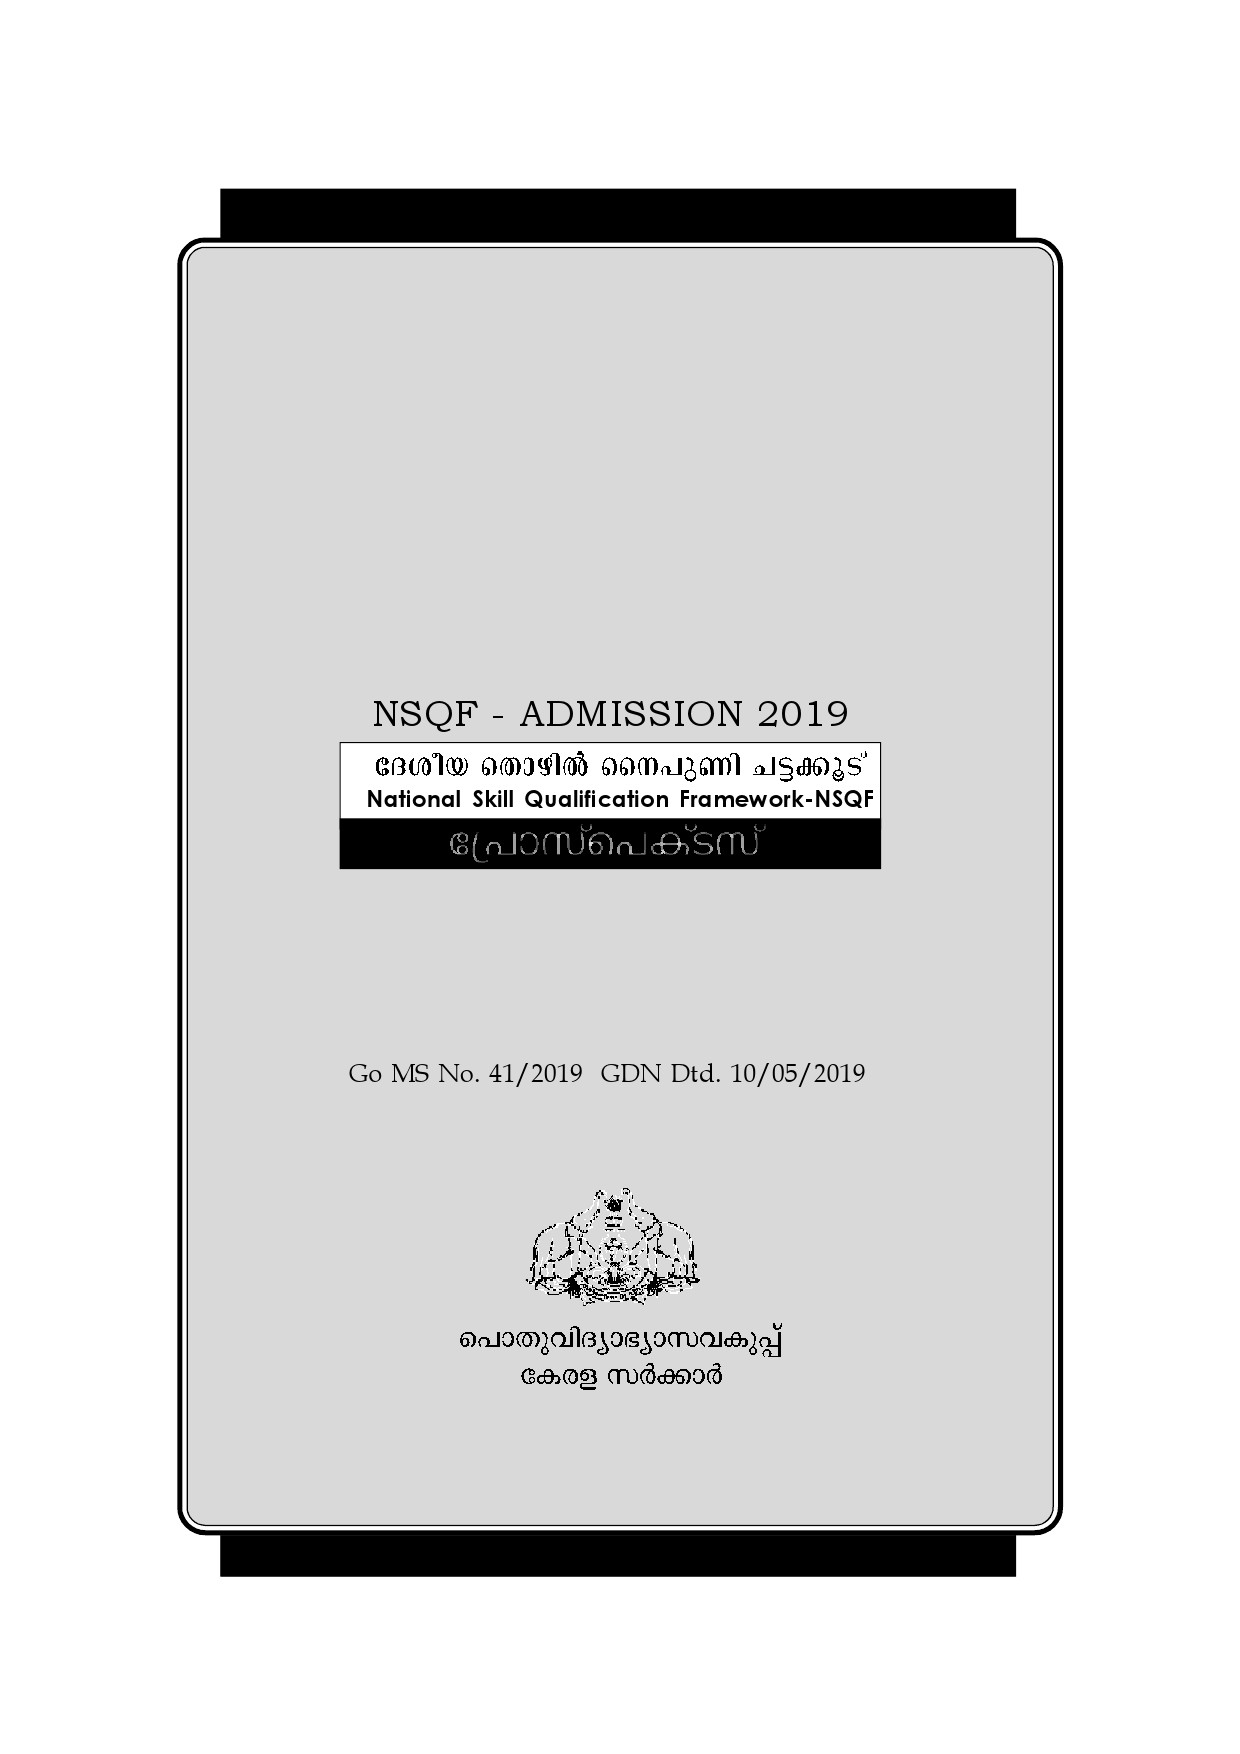 NSQF Admission 2019 Prospectus - Notification Image 1